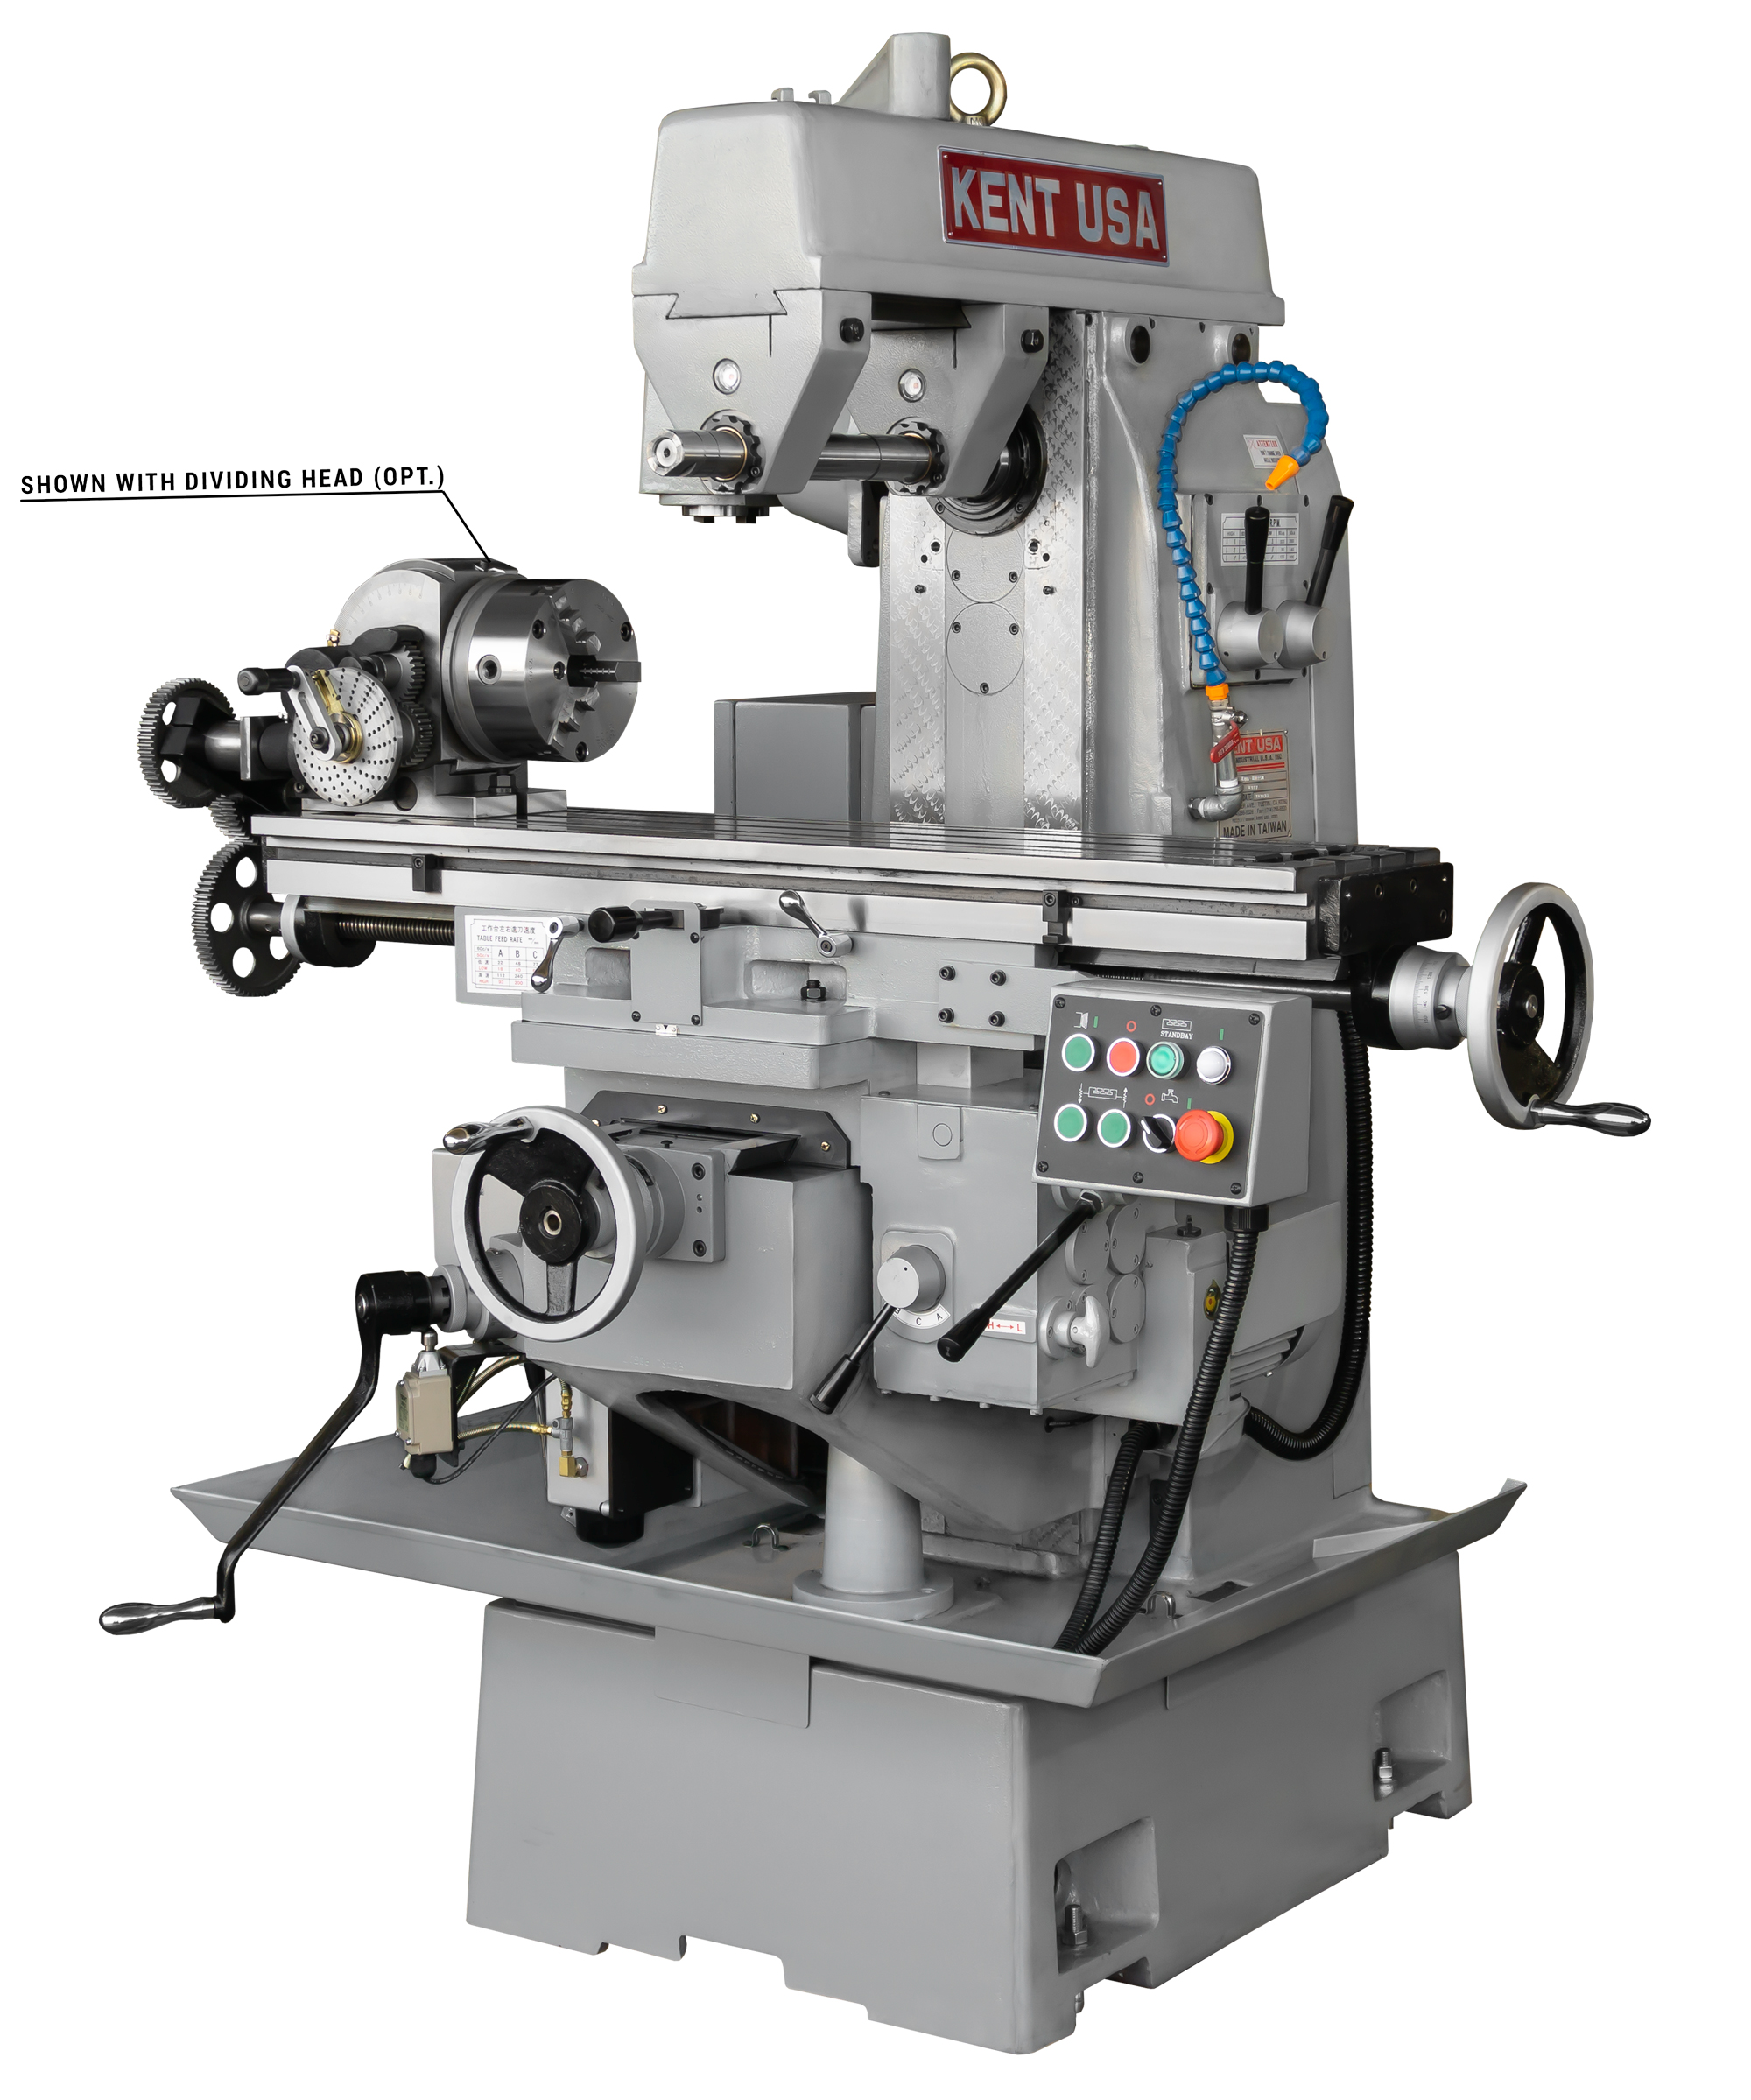 universal vertical milling machine